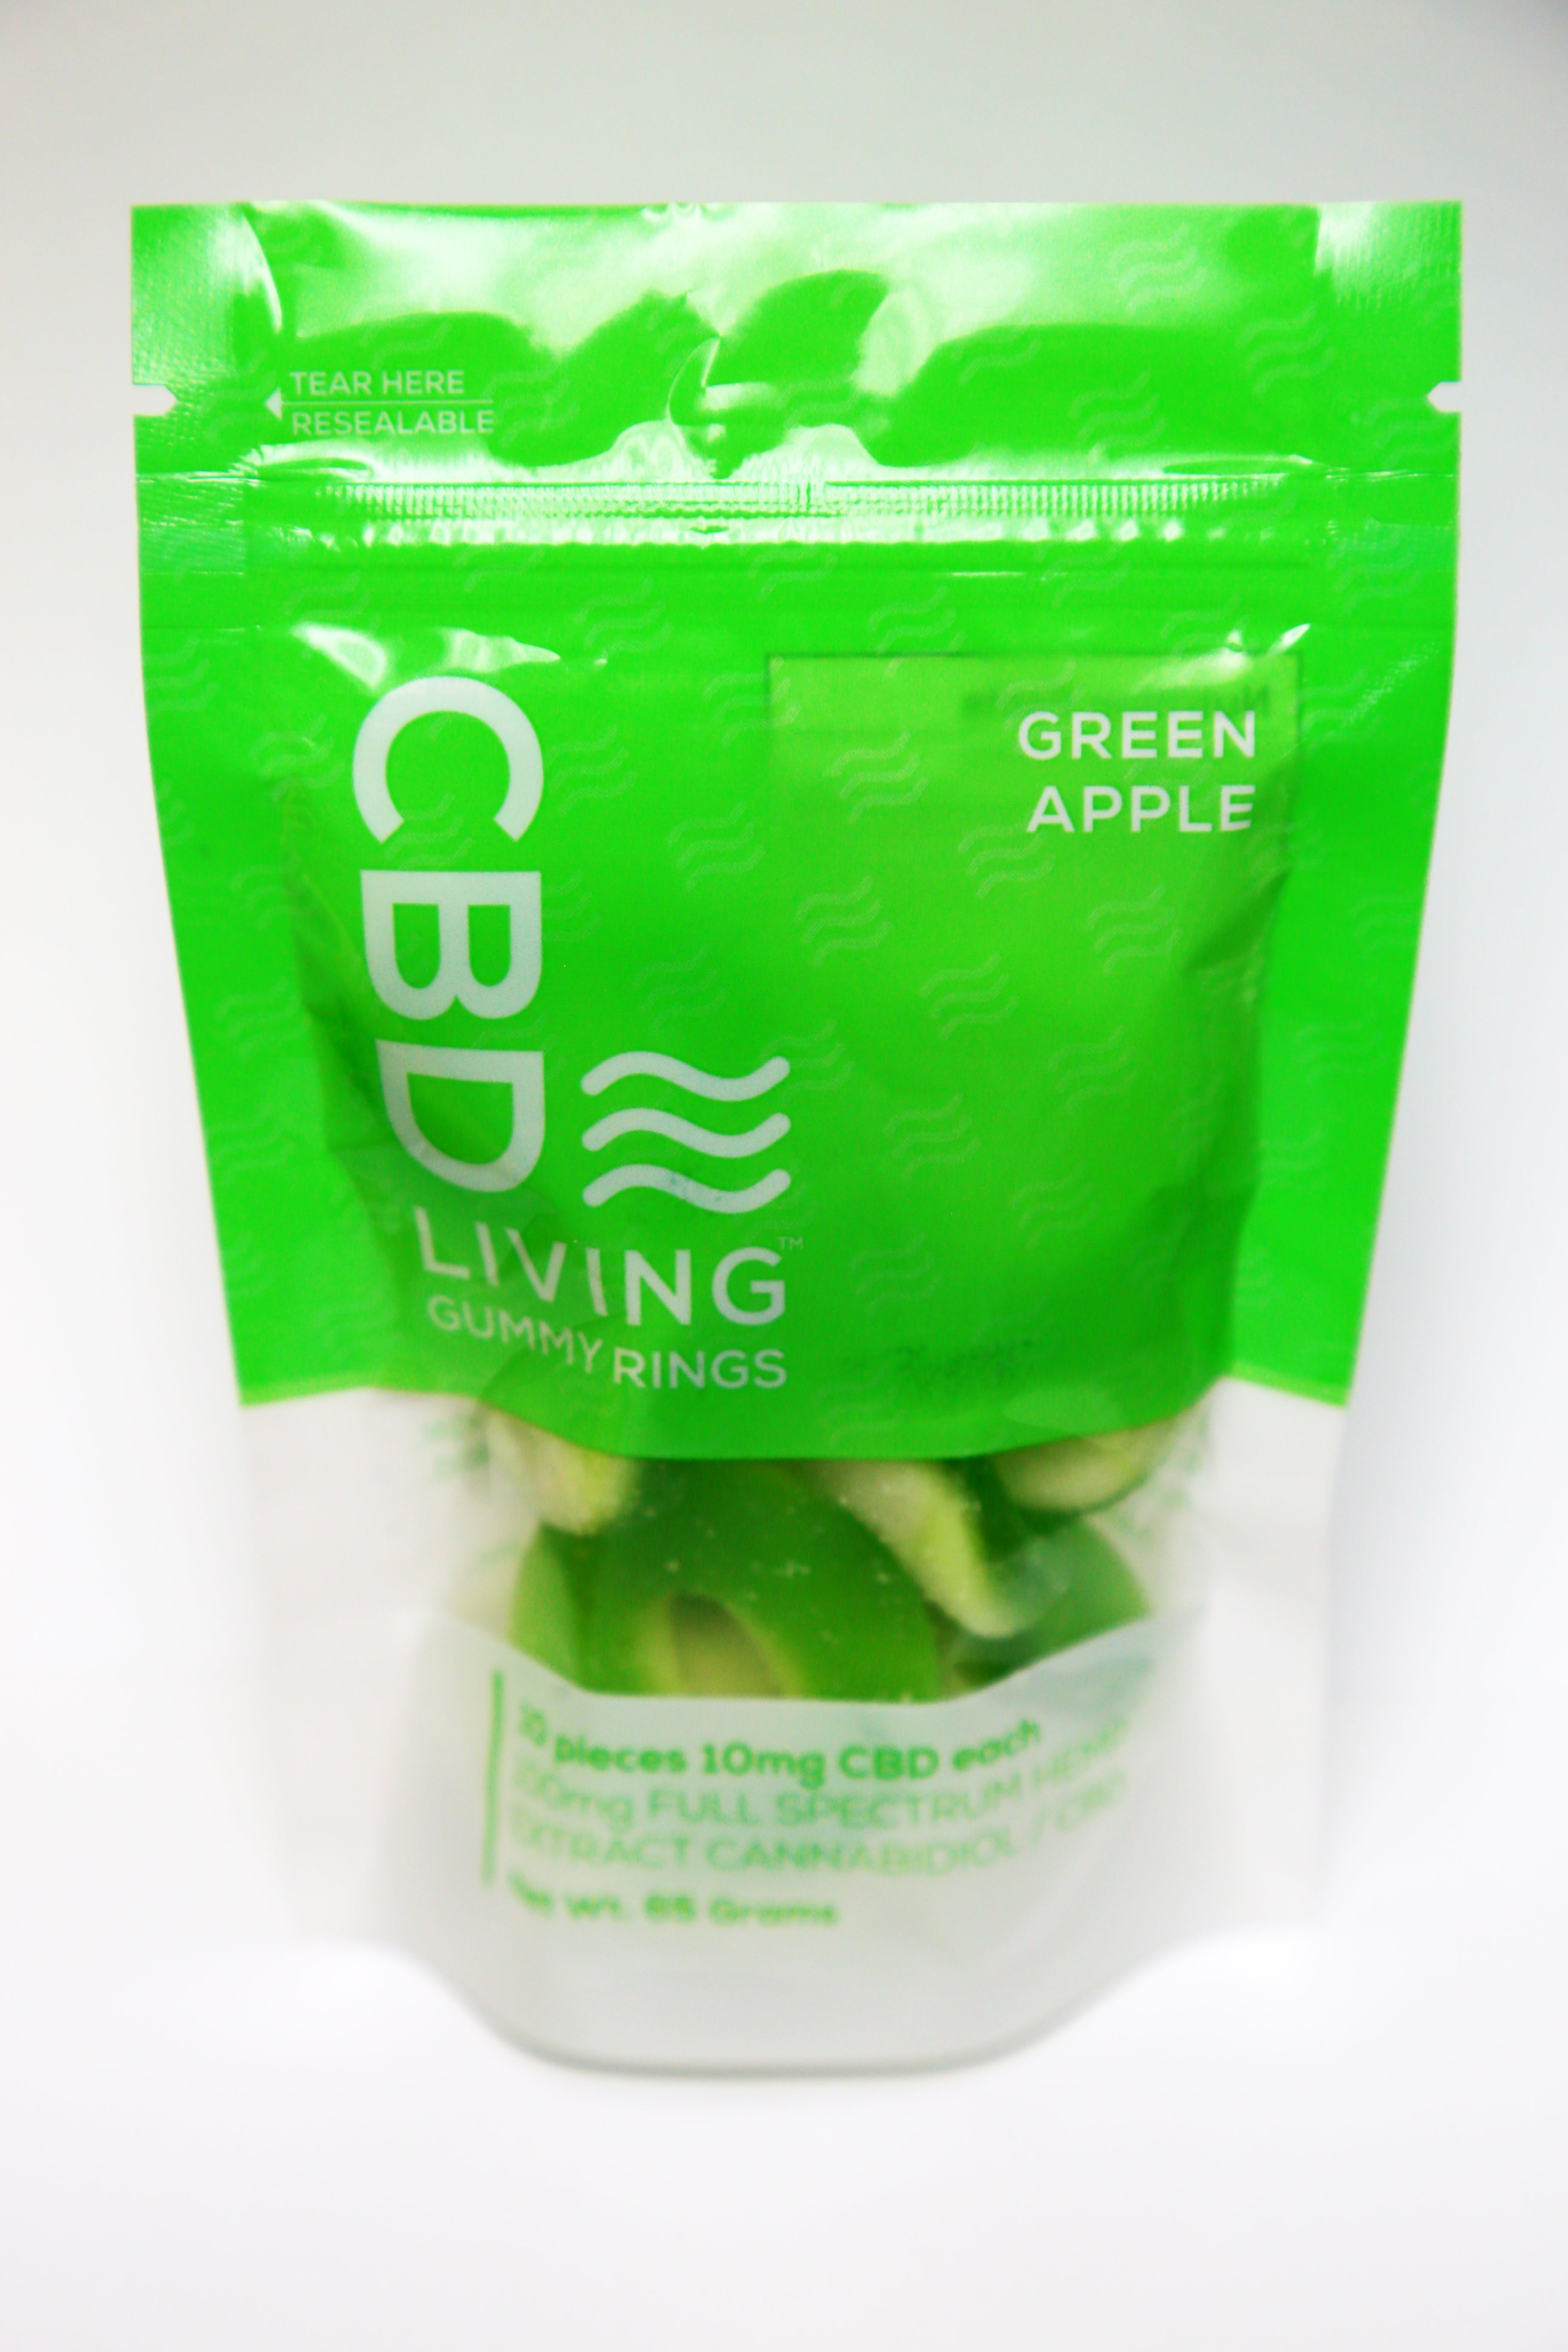 edible-cbd-living-gummy-rings-green-apple-bag-100-mg